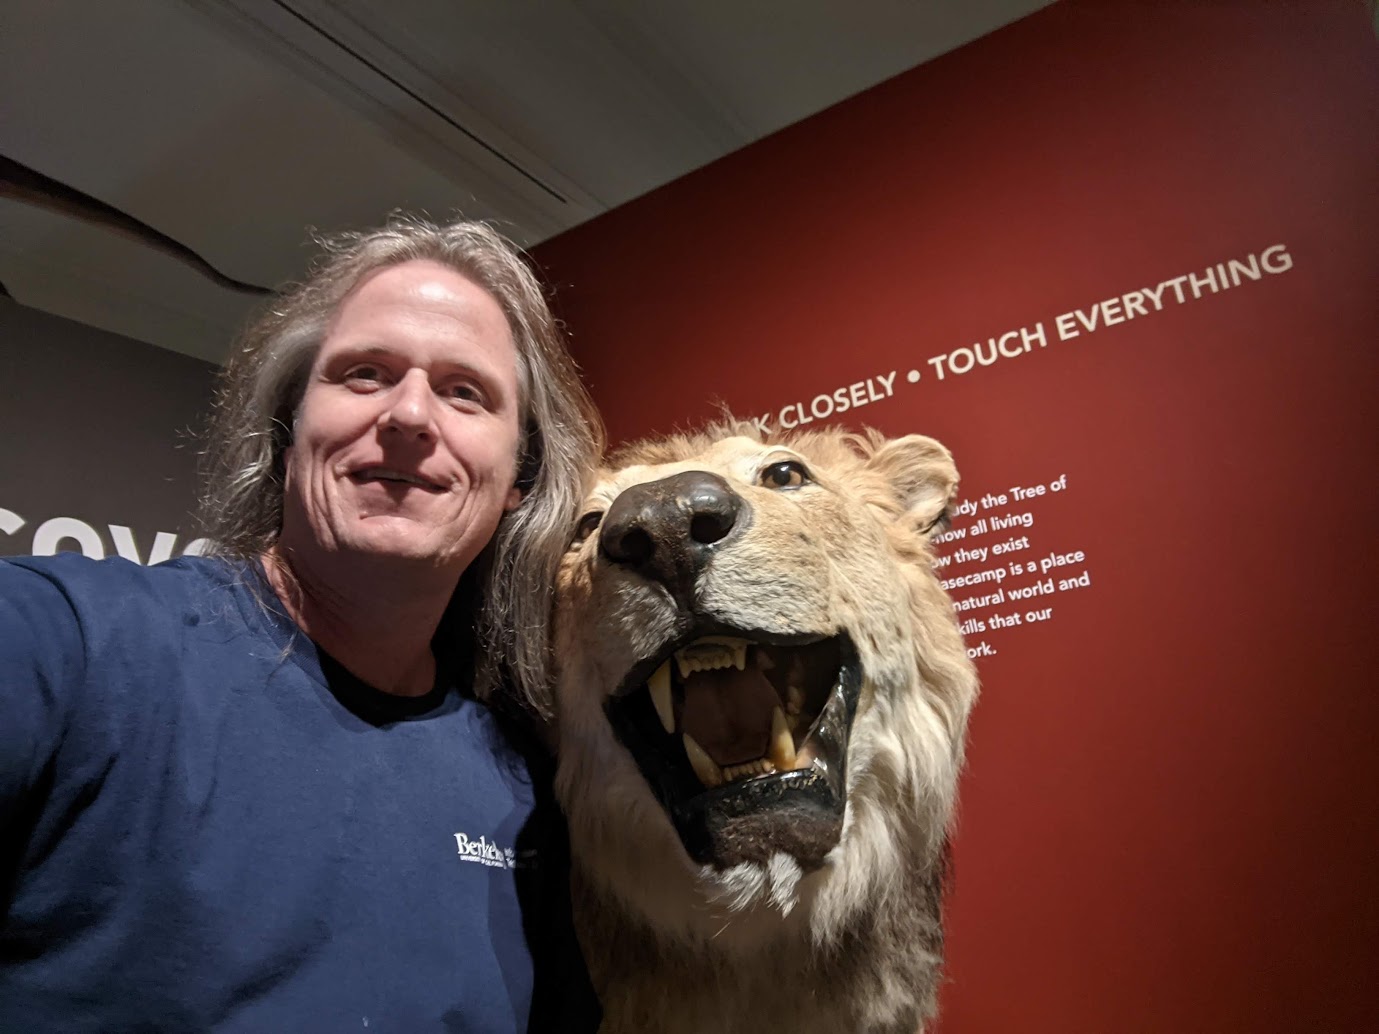 David Turner with lion